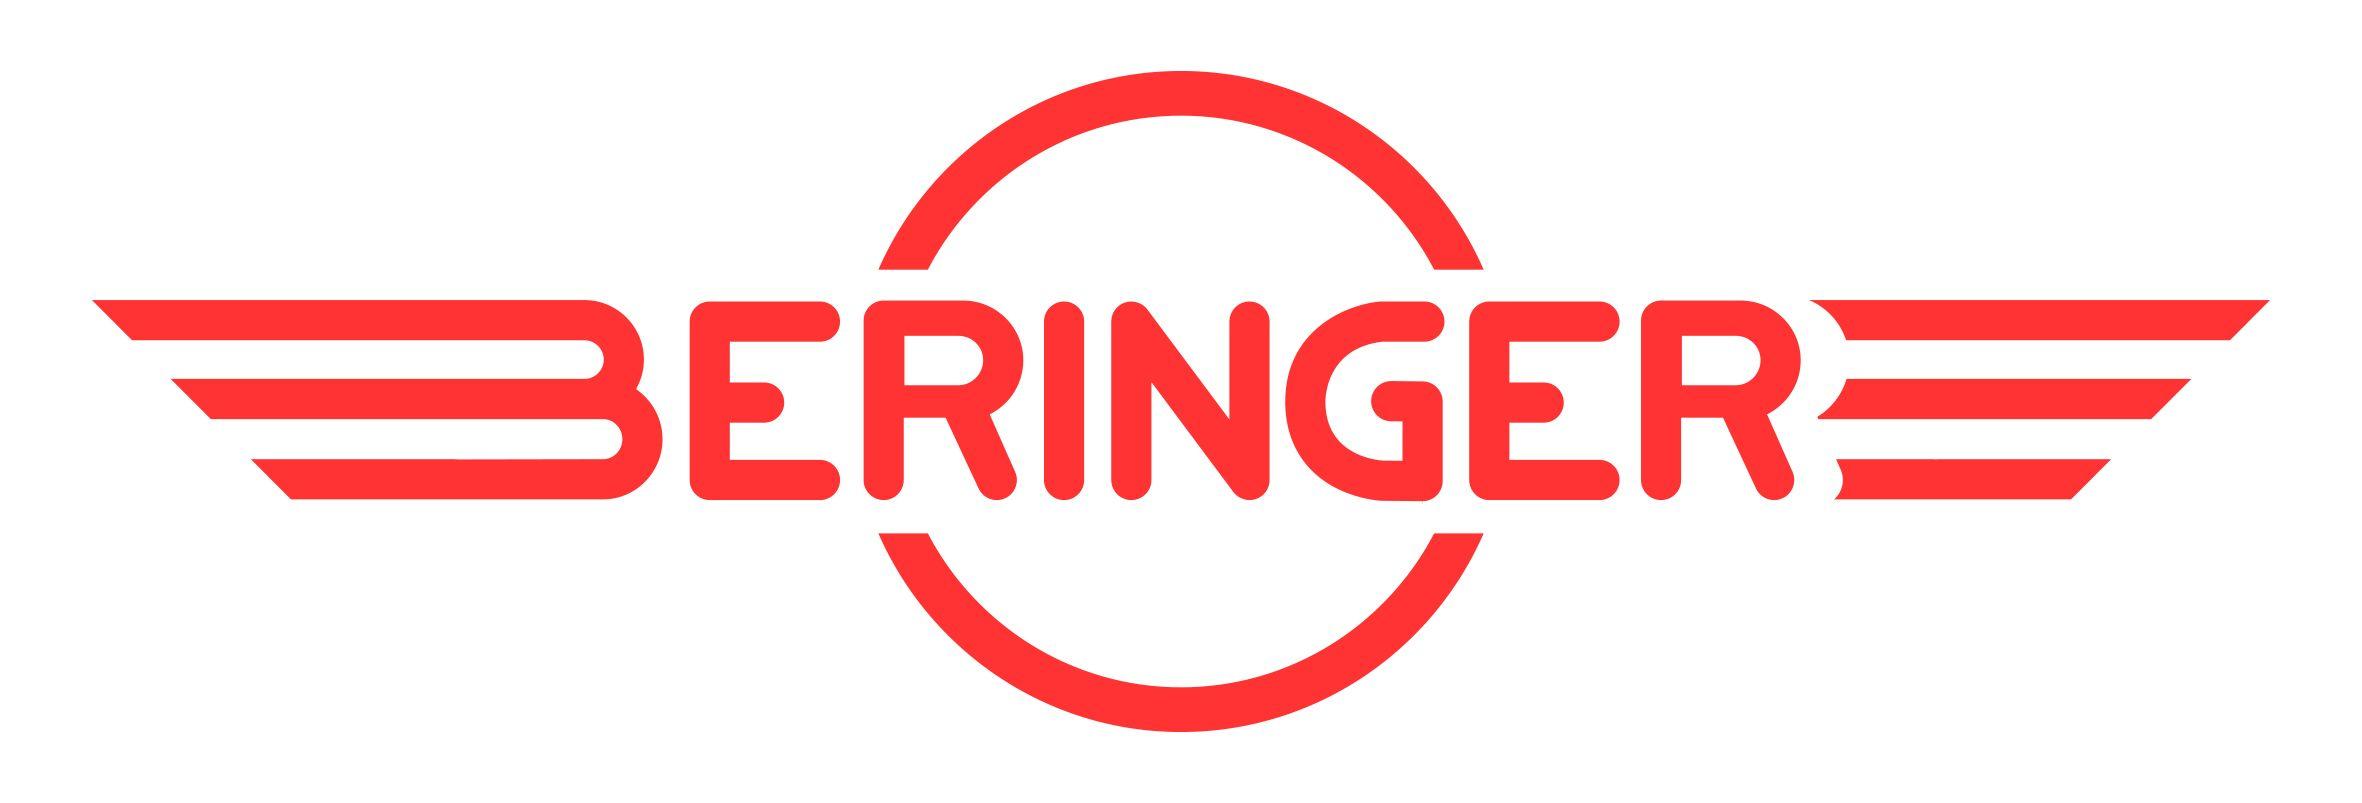 Beringer Logo - Beringer Aero